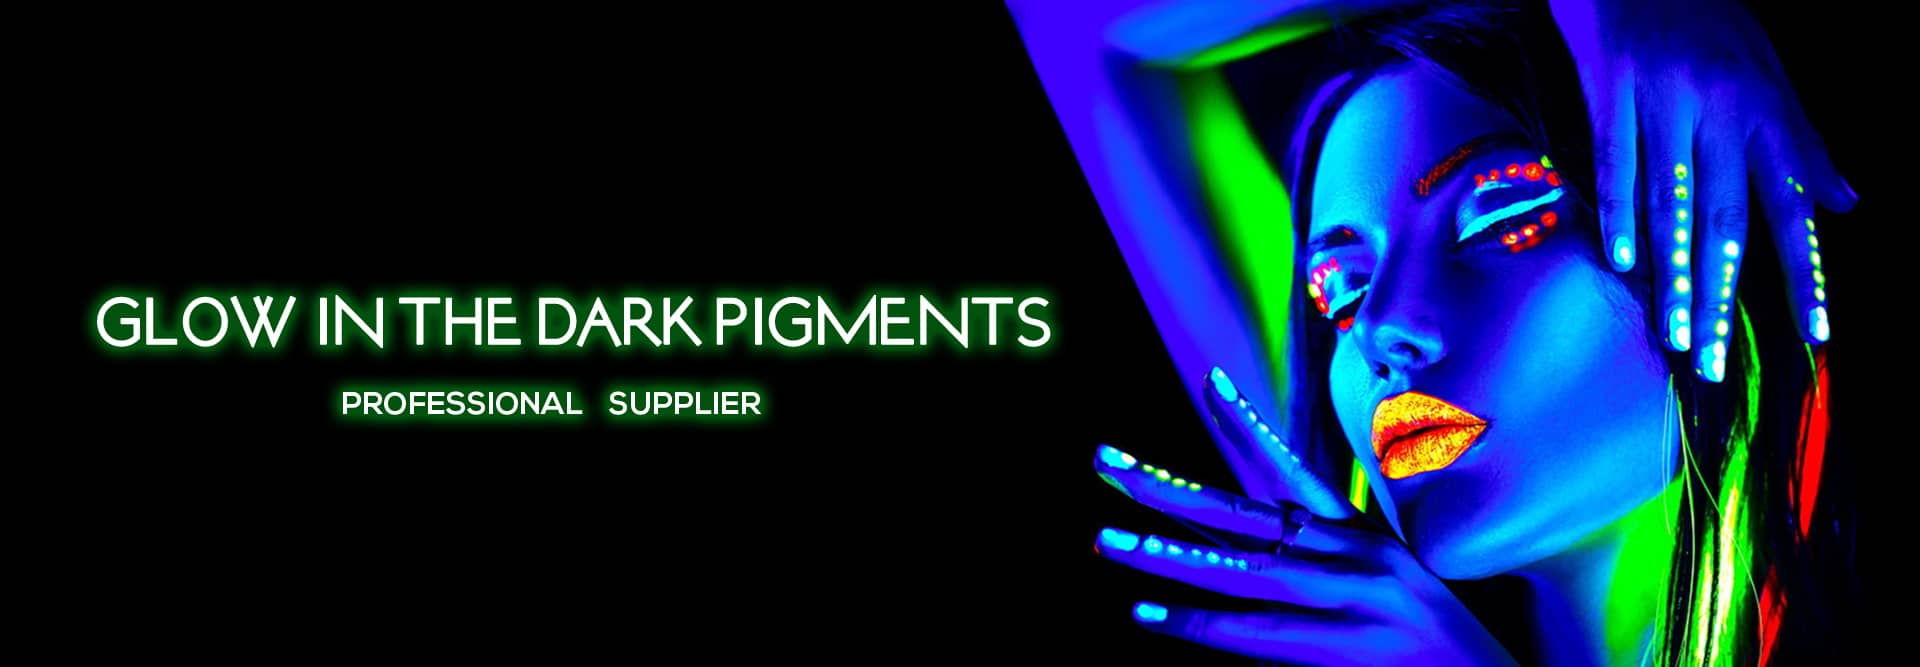 glow_pigments_supplier